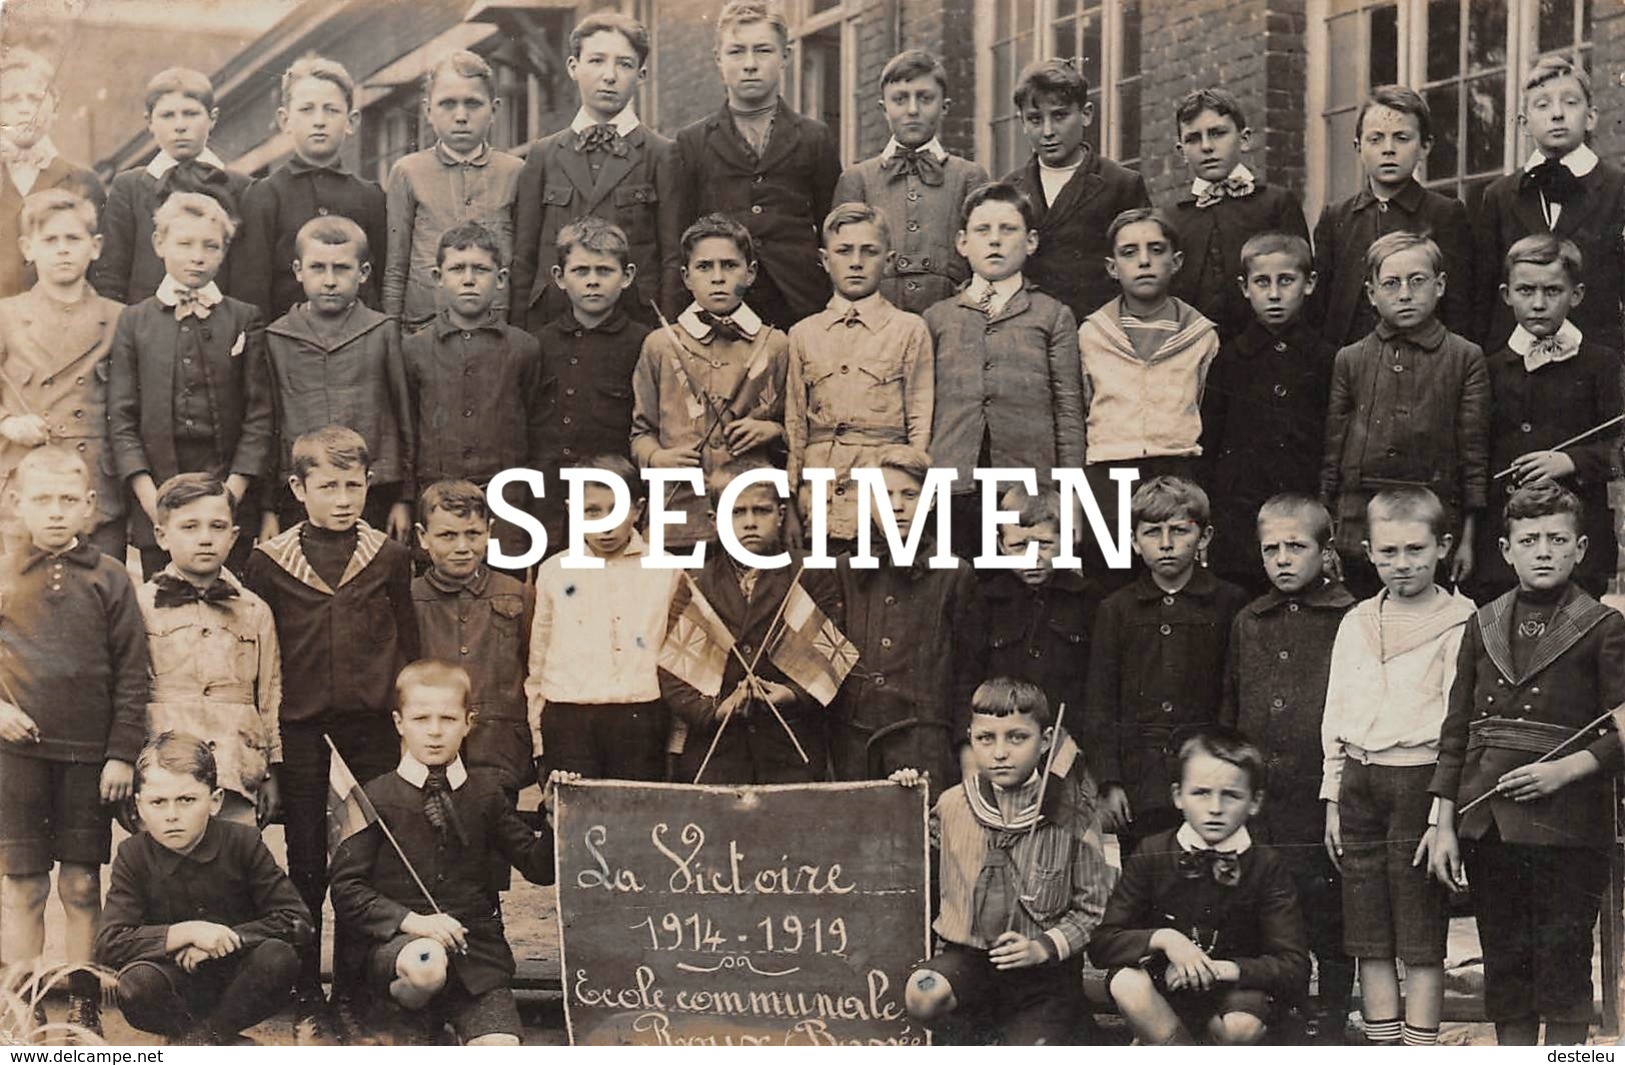 Fotokaart La Victoire 1914-19 Ecole Communale - Ham - Ham